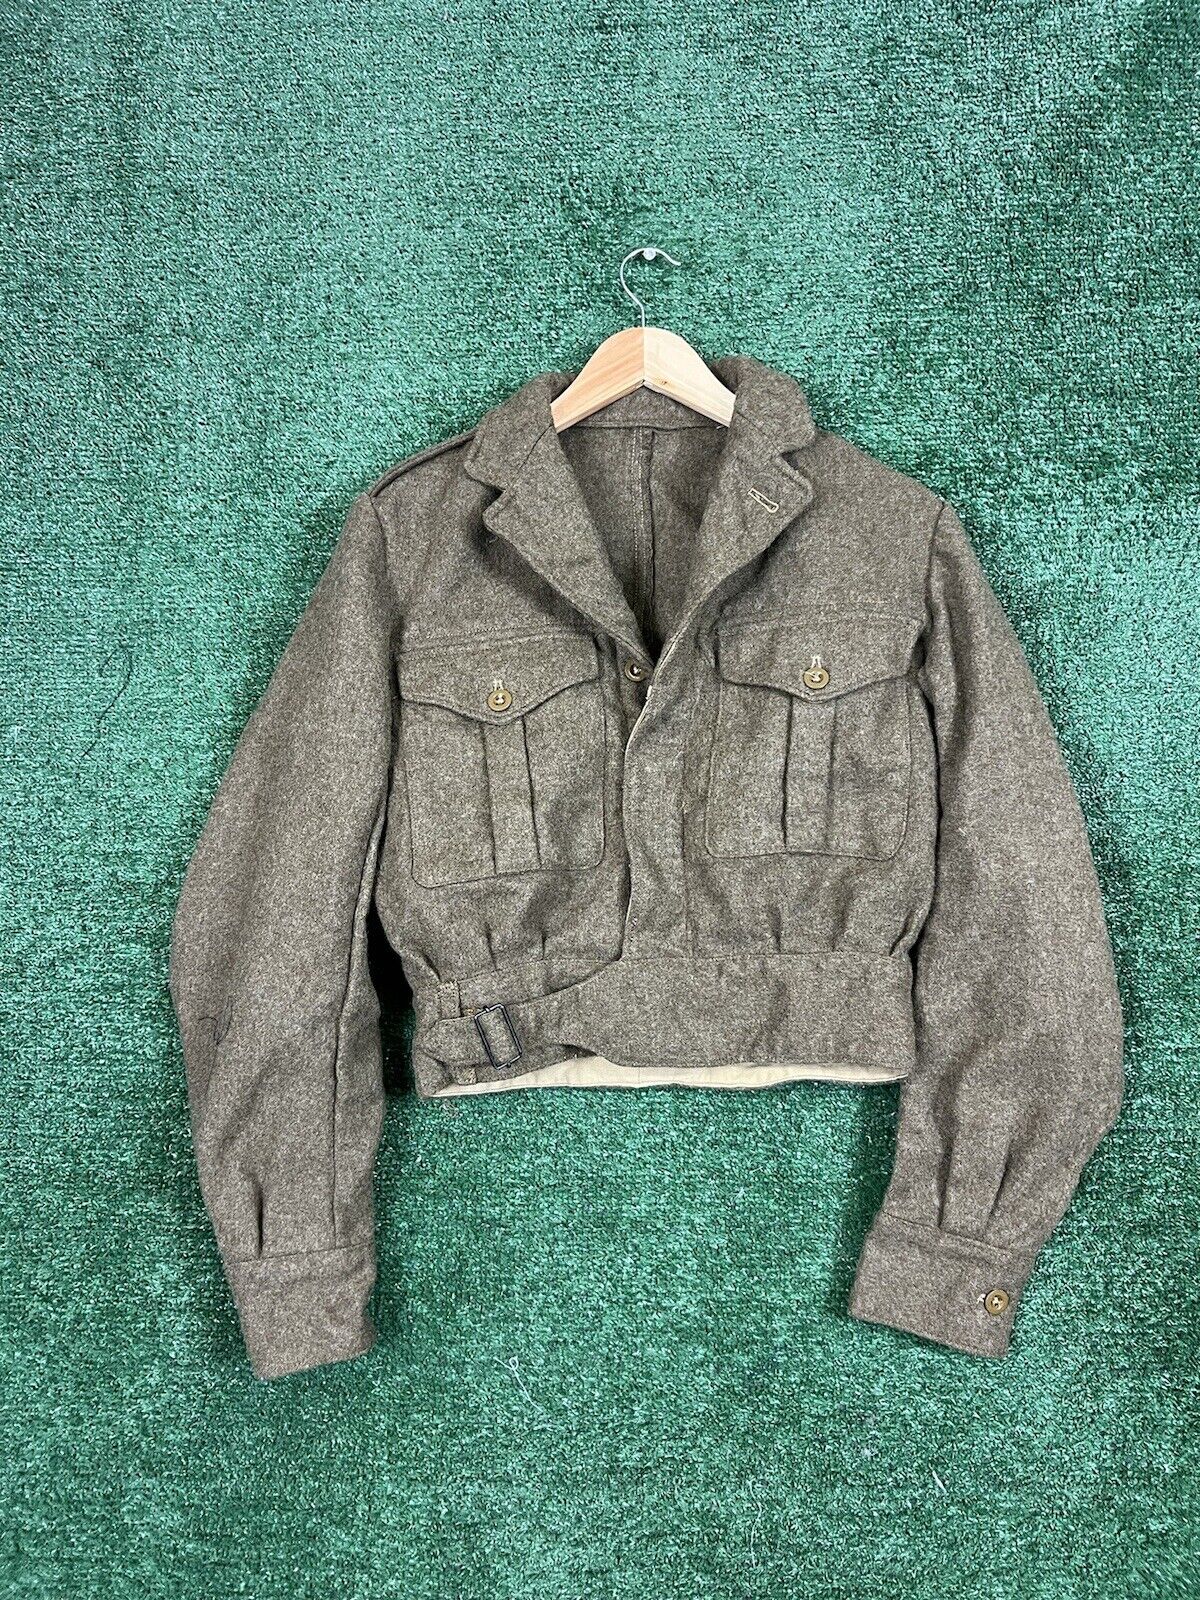 WW2 British Battledress Blouse Jacket Women’s Size 10 Khaki Green Original WWII